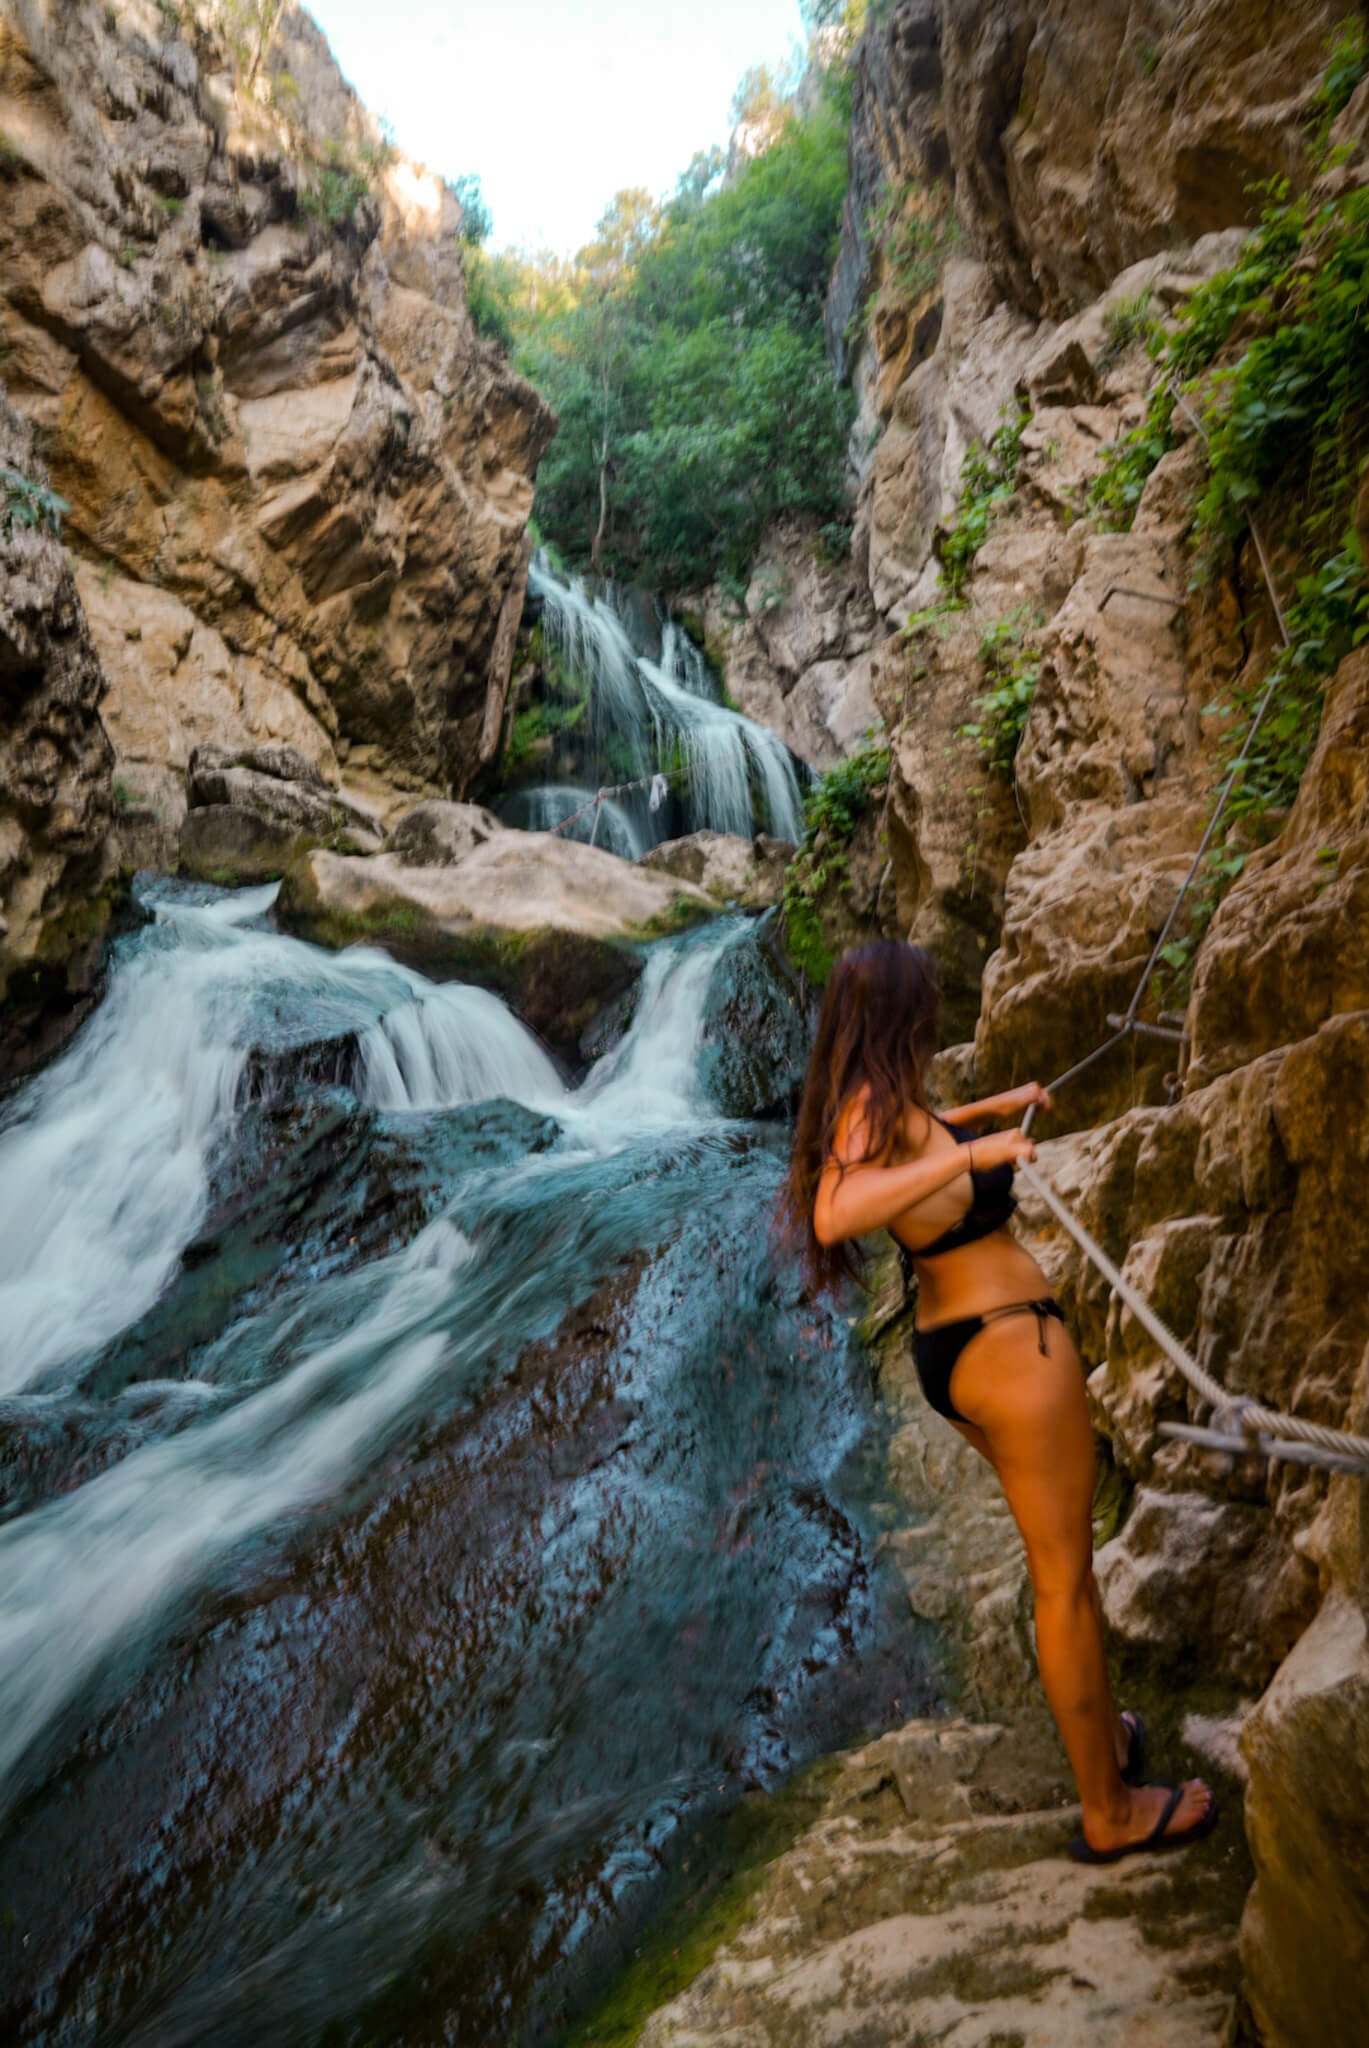 Mirusha waterfalls, Kosovo, a country under the radar